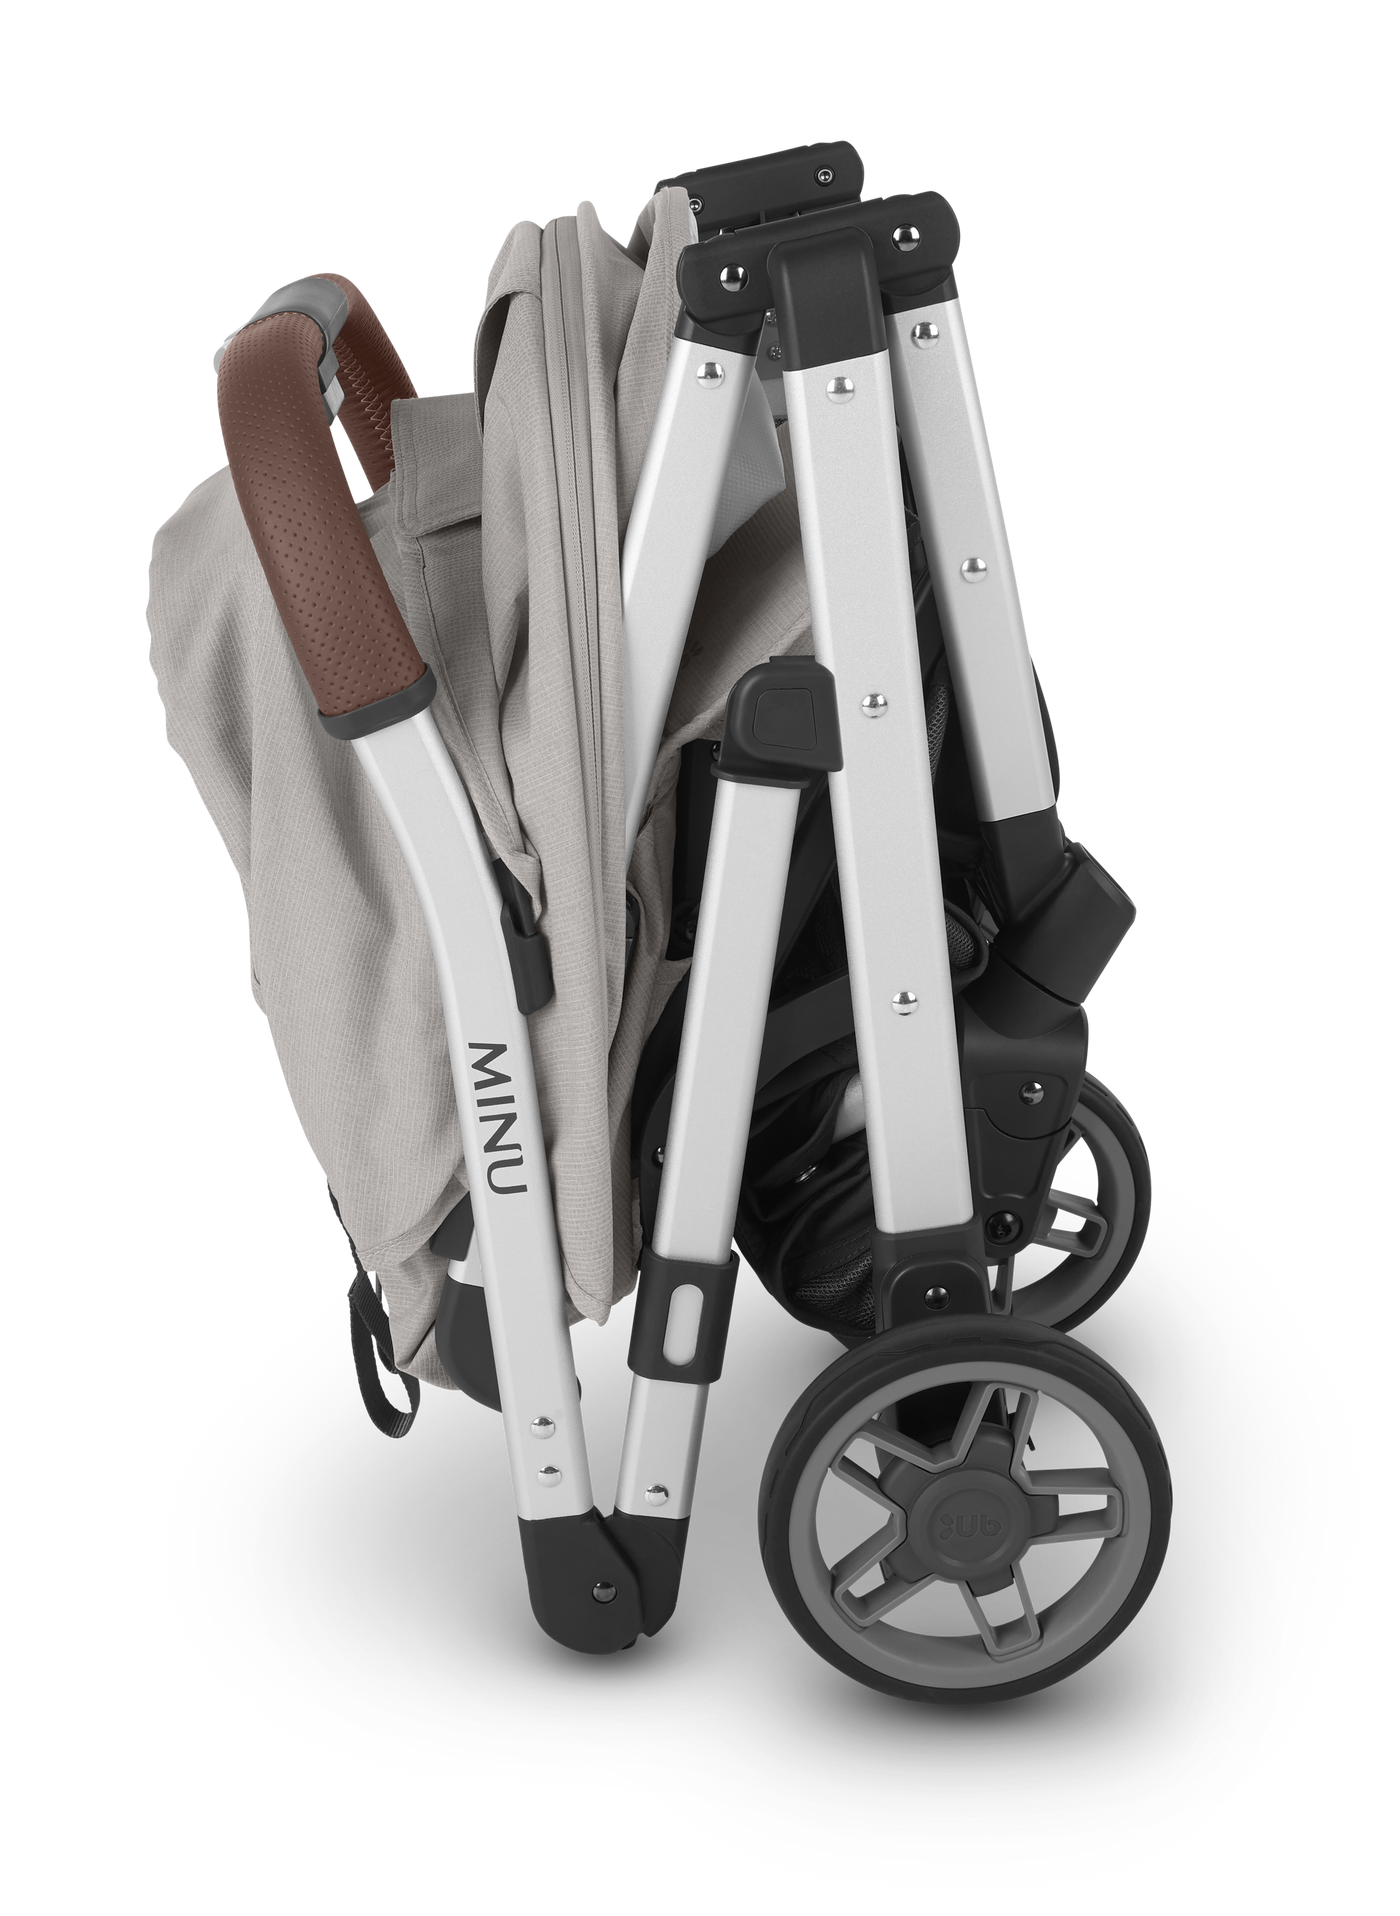 UPPAbaby® MINU V2 Stroller